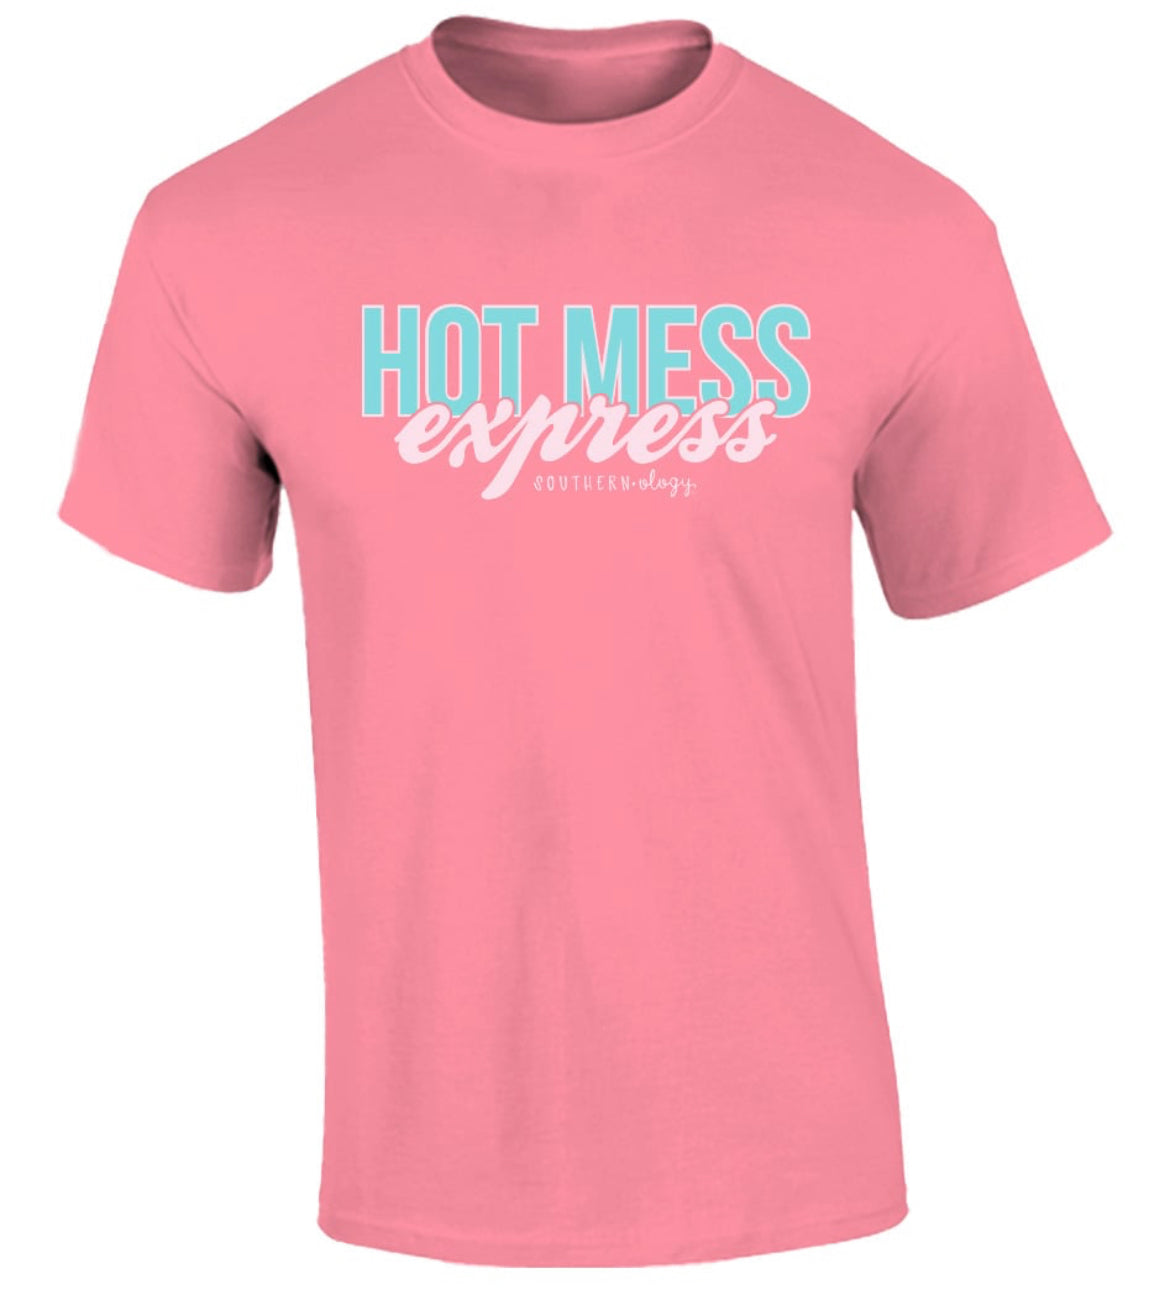 Southernology SS Hot Mess Express Statement T Shirt*